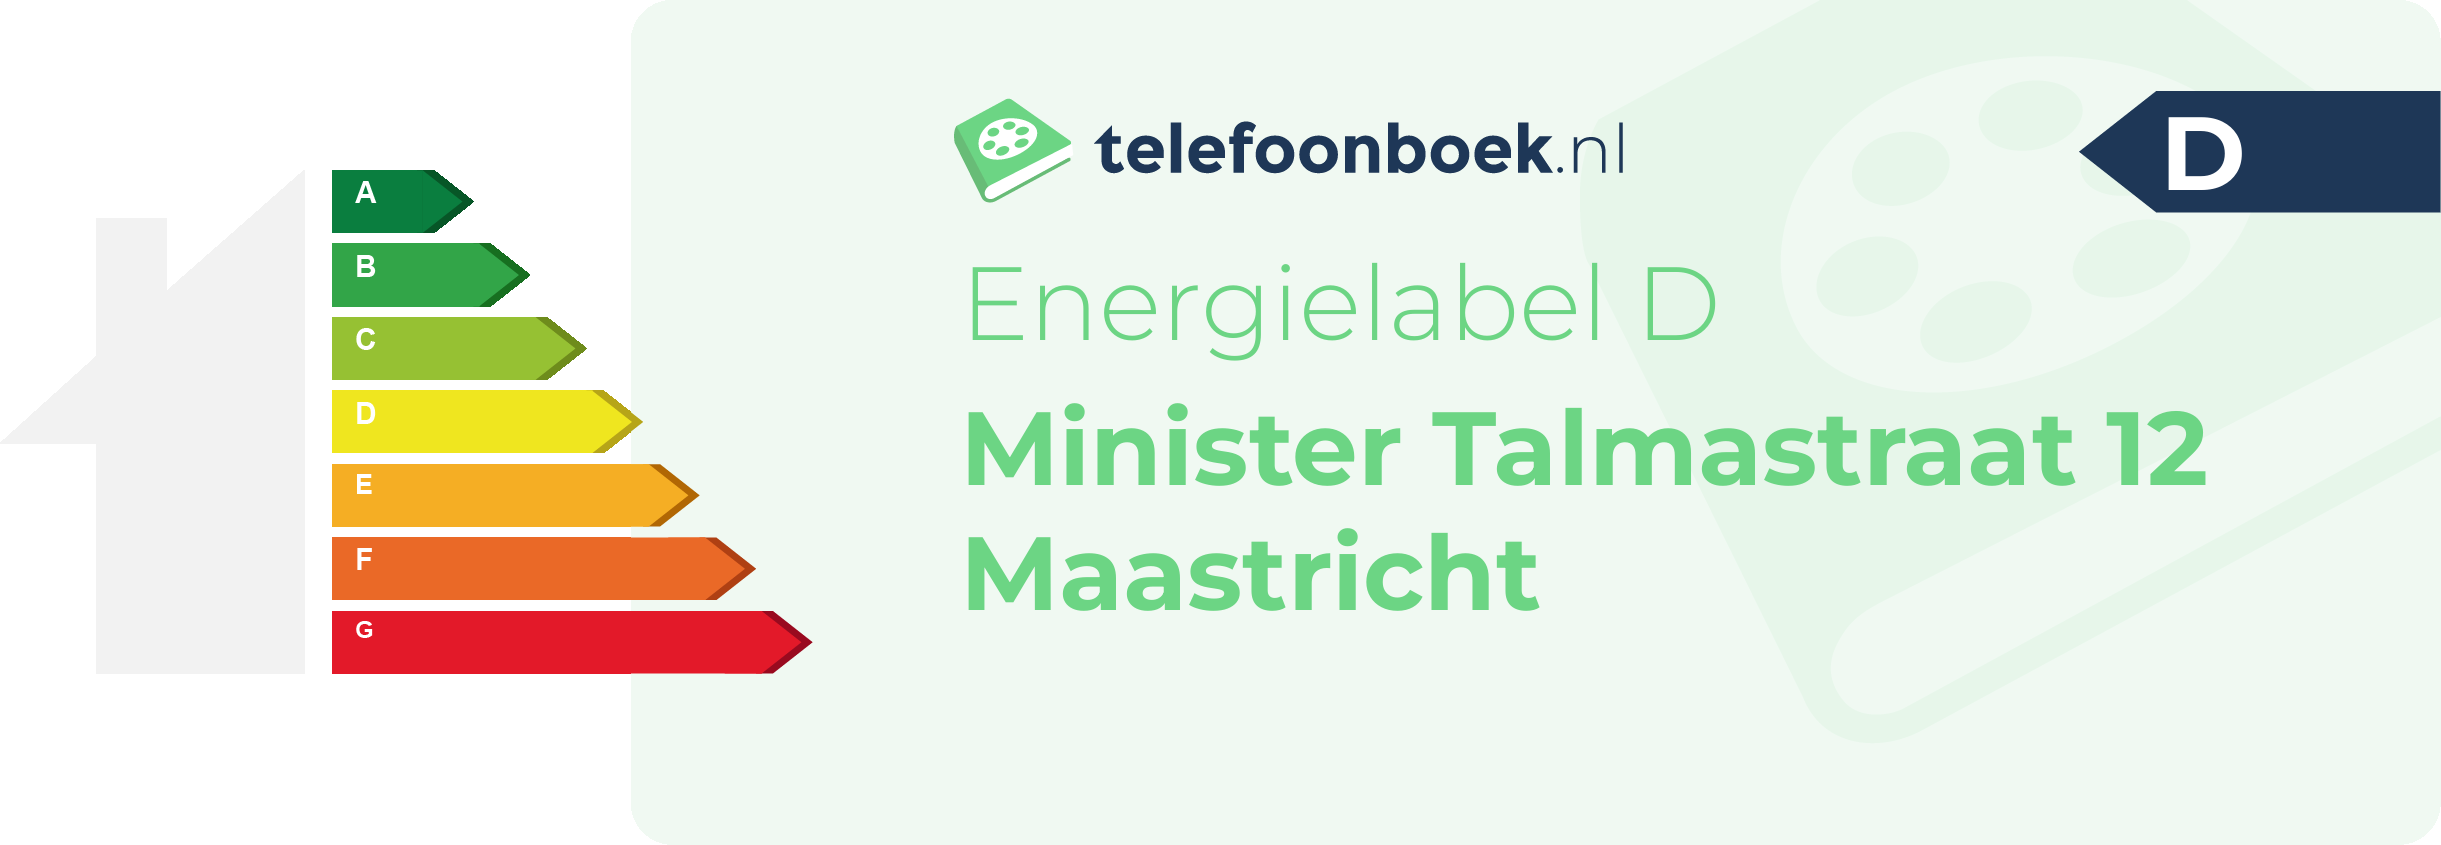 Energielabel Minister Talmastraat 12 Maastricht